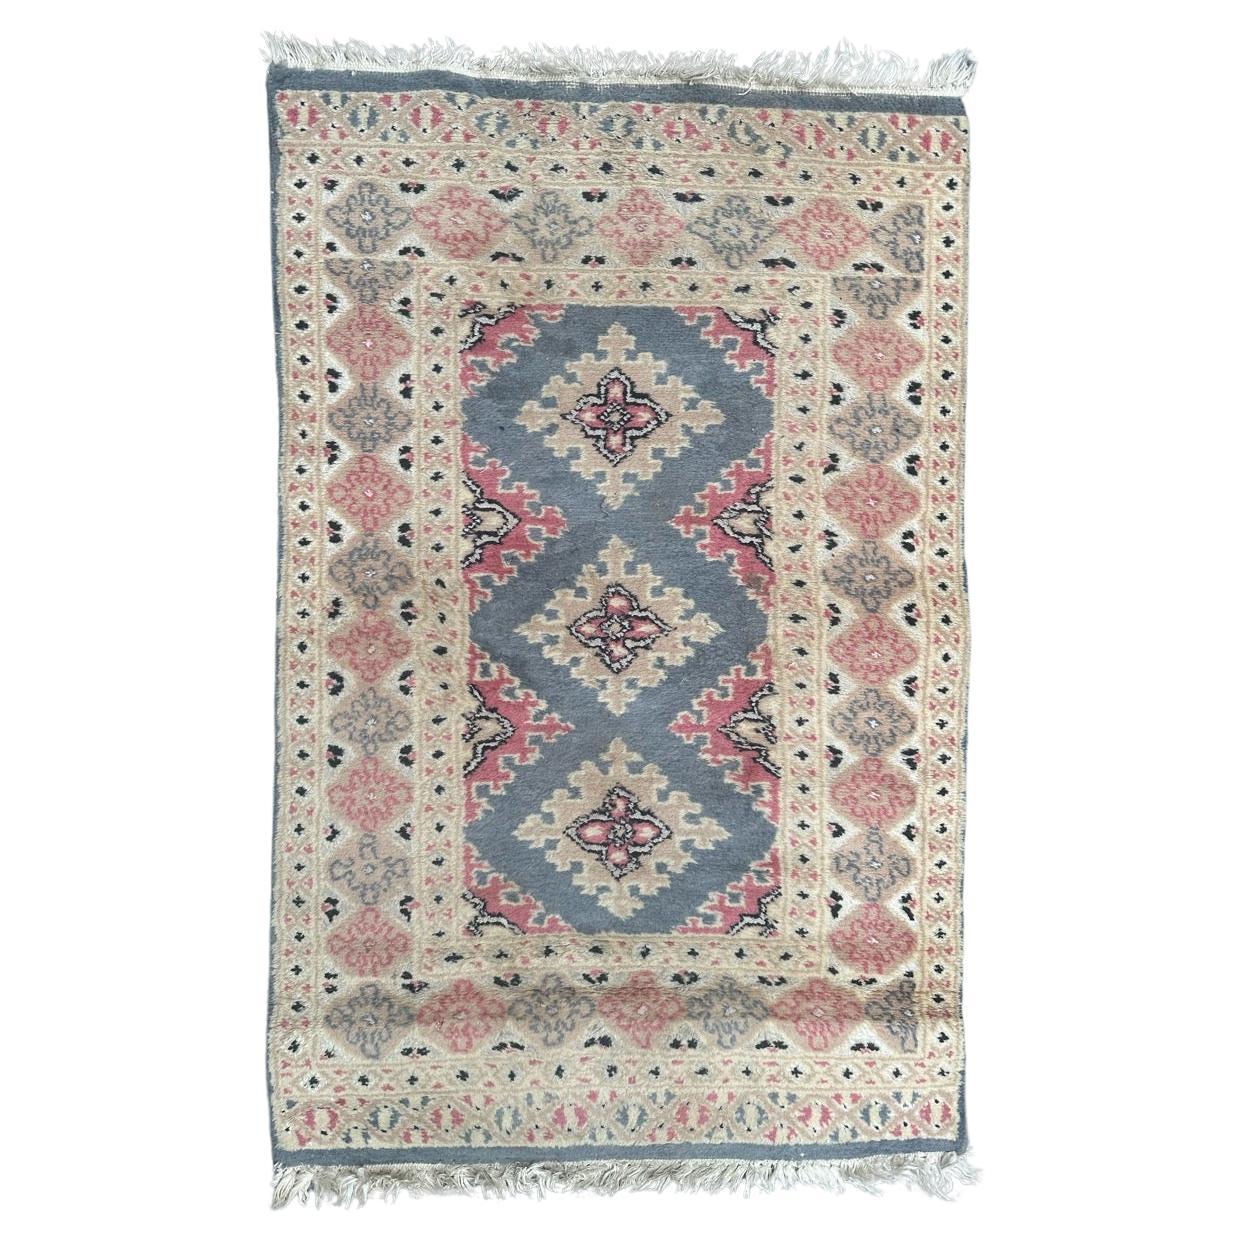  pretty small vintage Pakistani rug For Sale